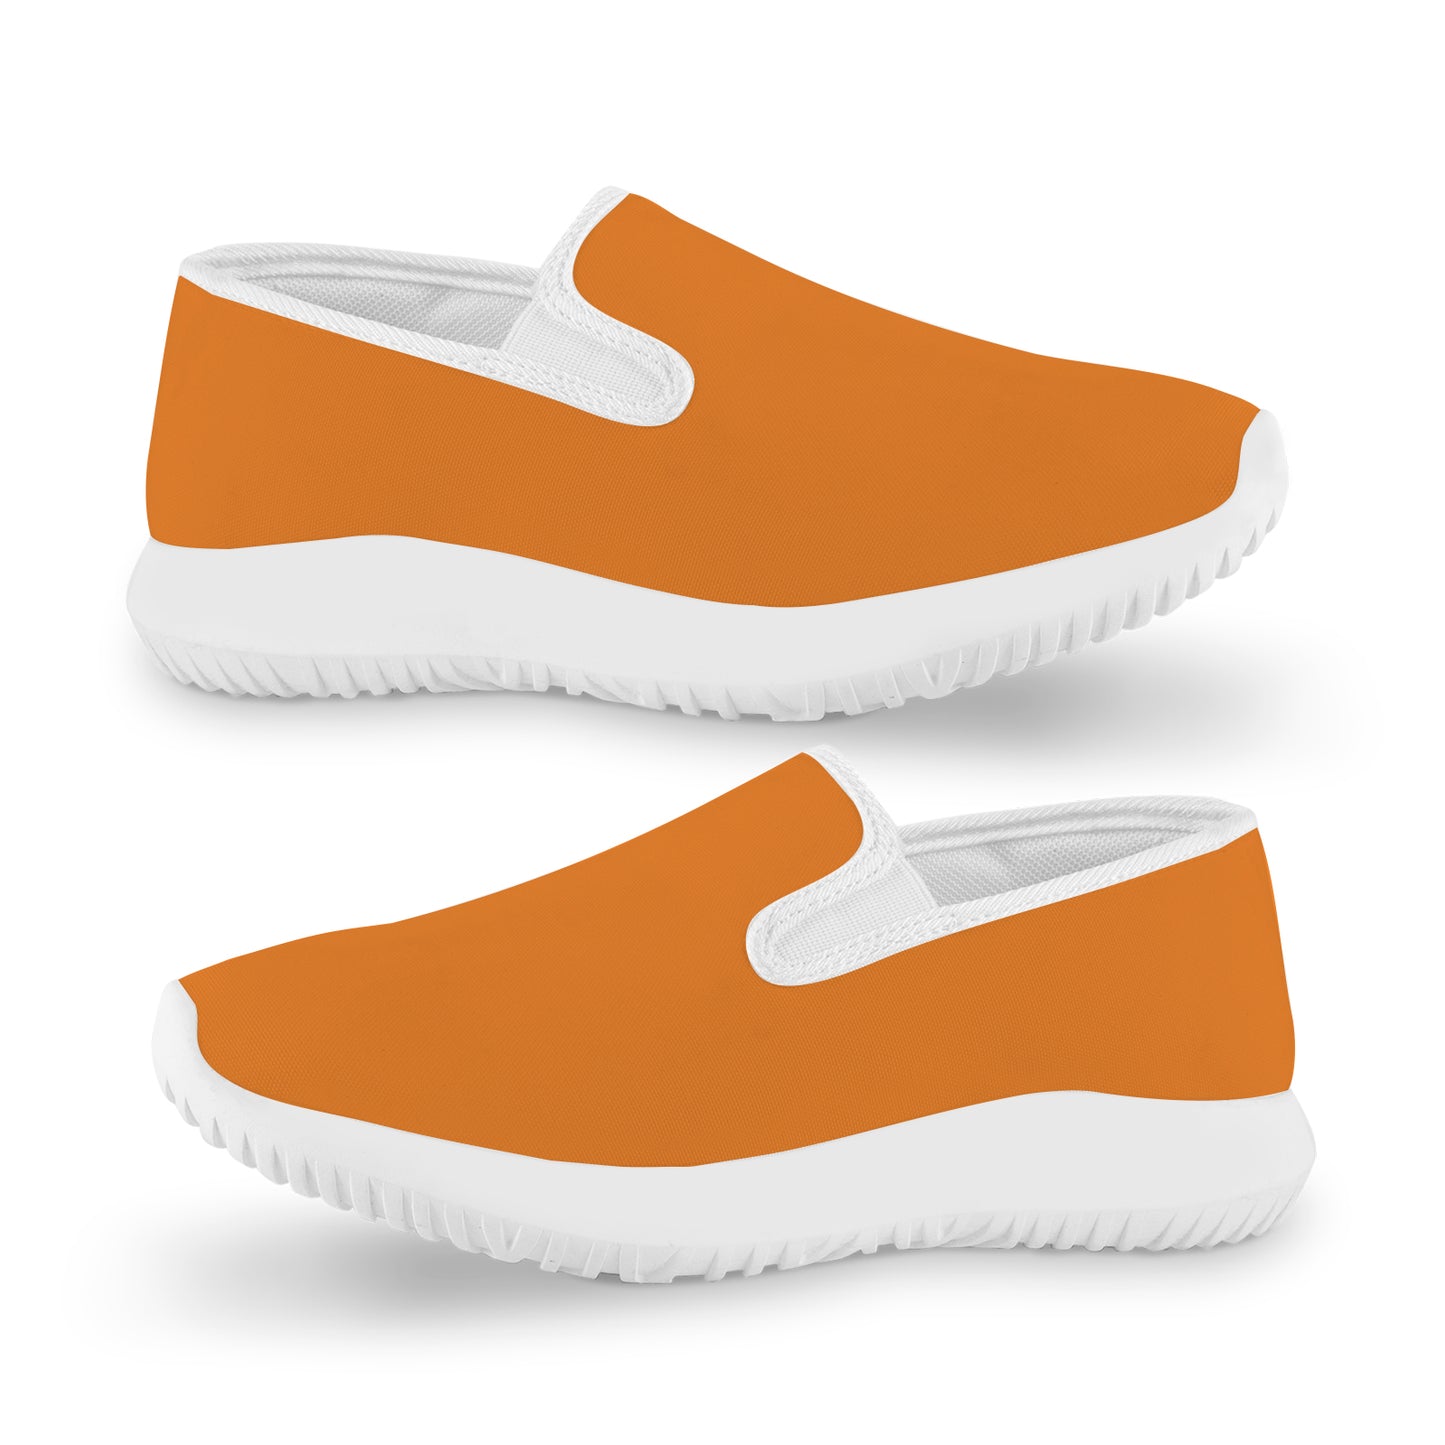 Women's Slip-on Sneakers - Classic Orange